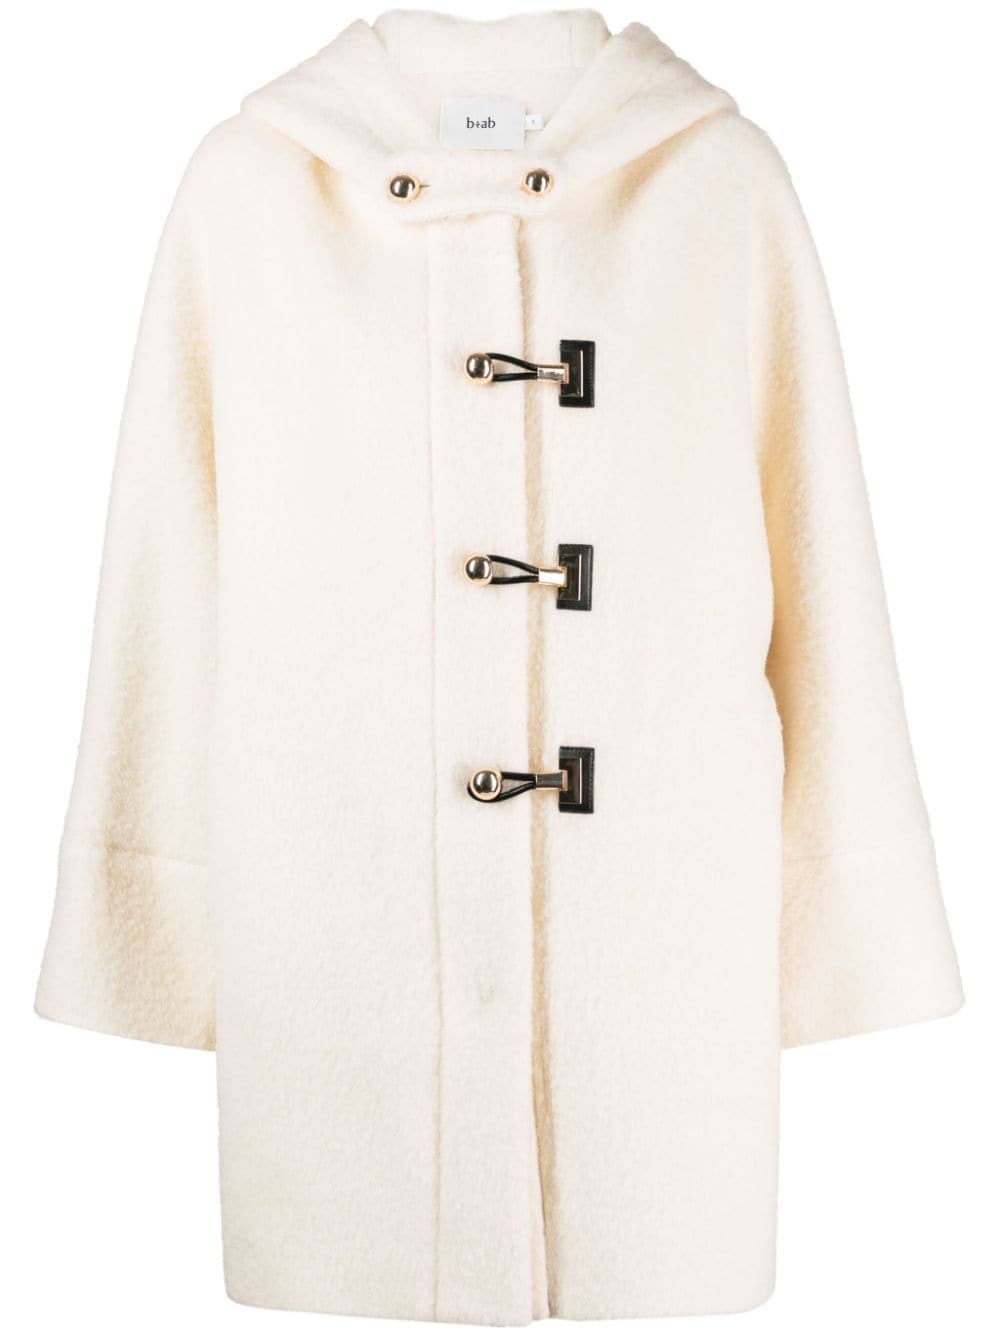 b+ab hooded wool-blend coat - Toni neutri